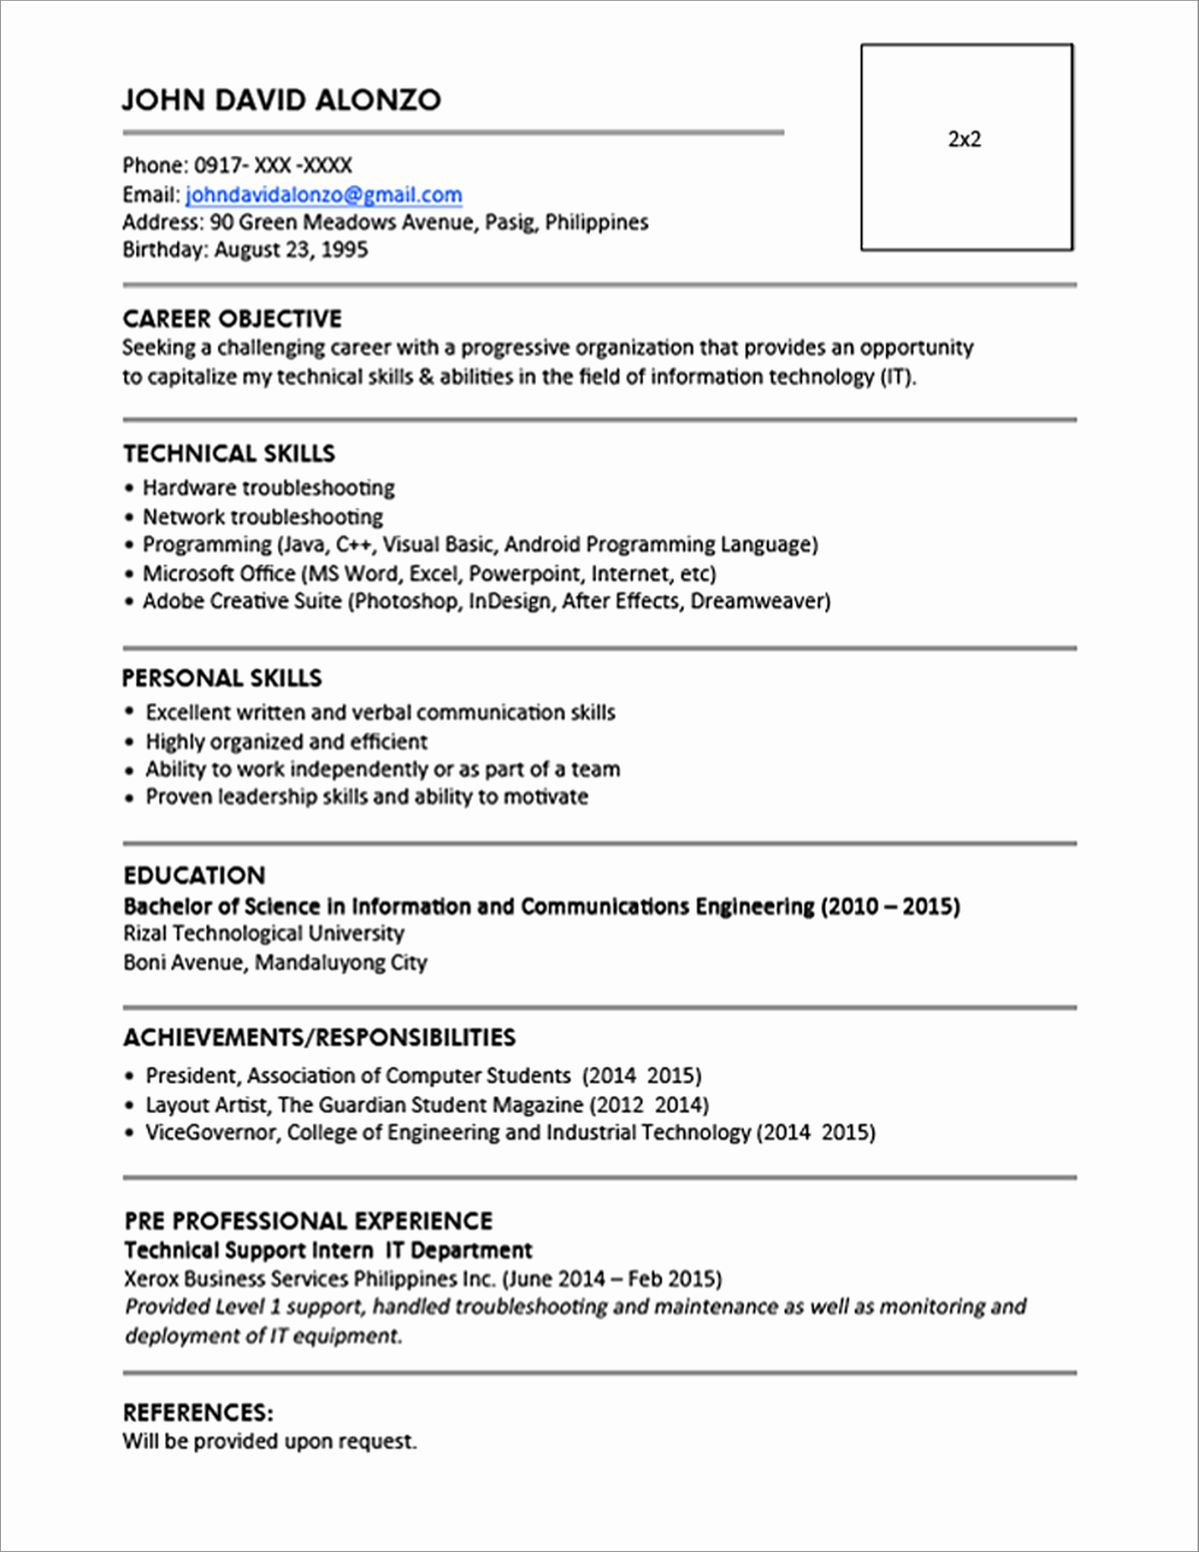 Sample Of Resume with 2×2 Picture Amerose Garzon (ameroseg) – Profile Pinterest